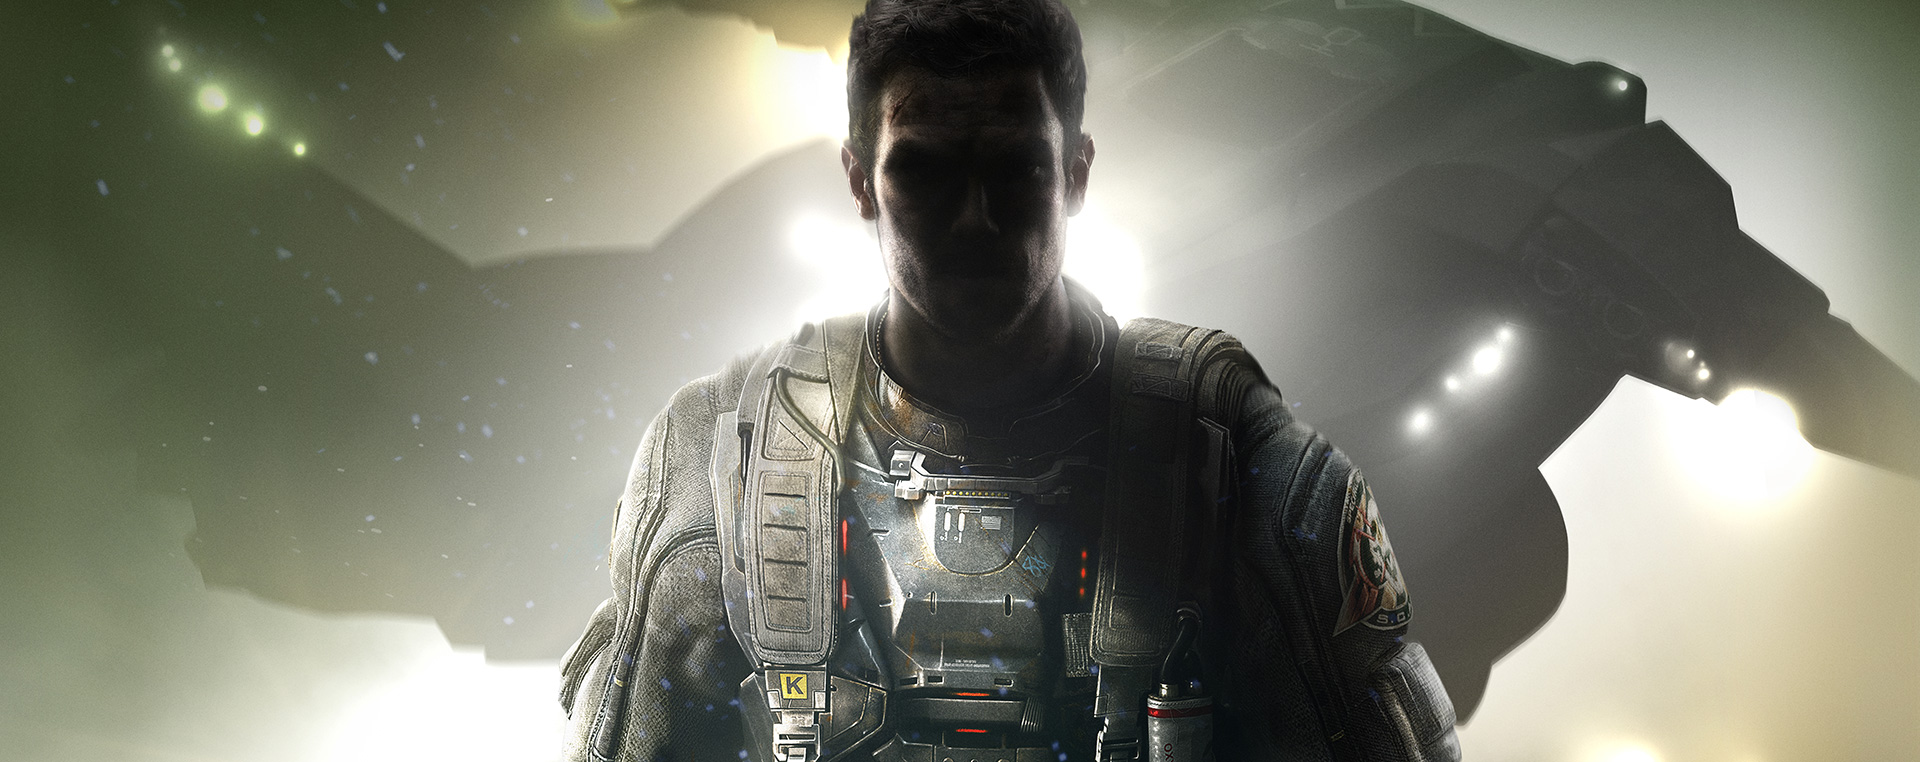 Call of Duty: Infinite Warfare Revealed, Launching on November 4